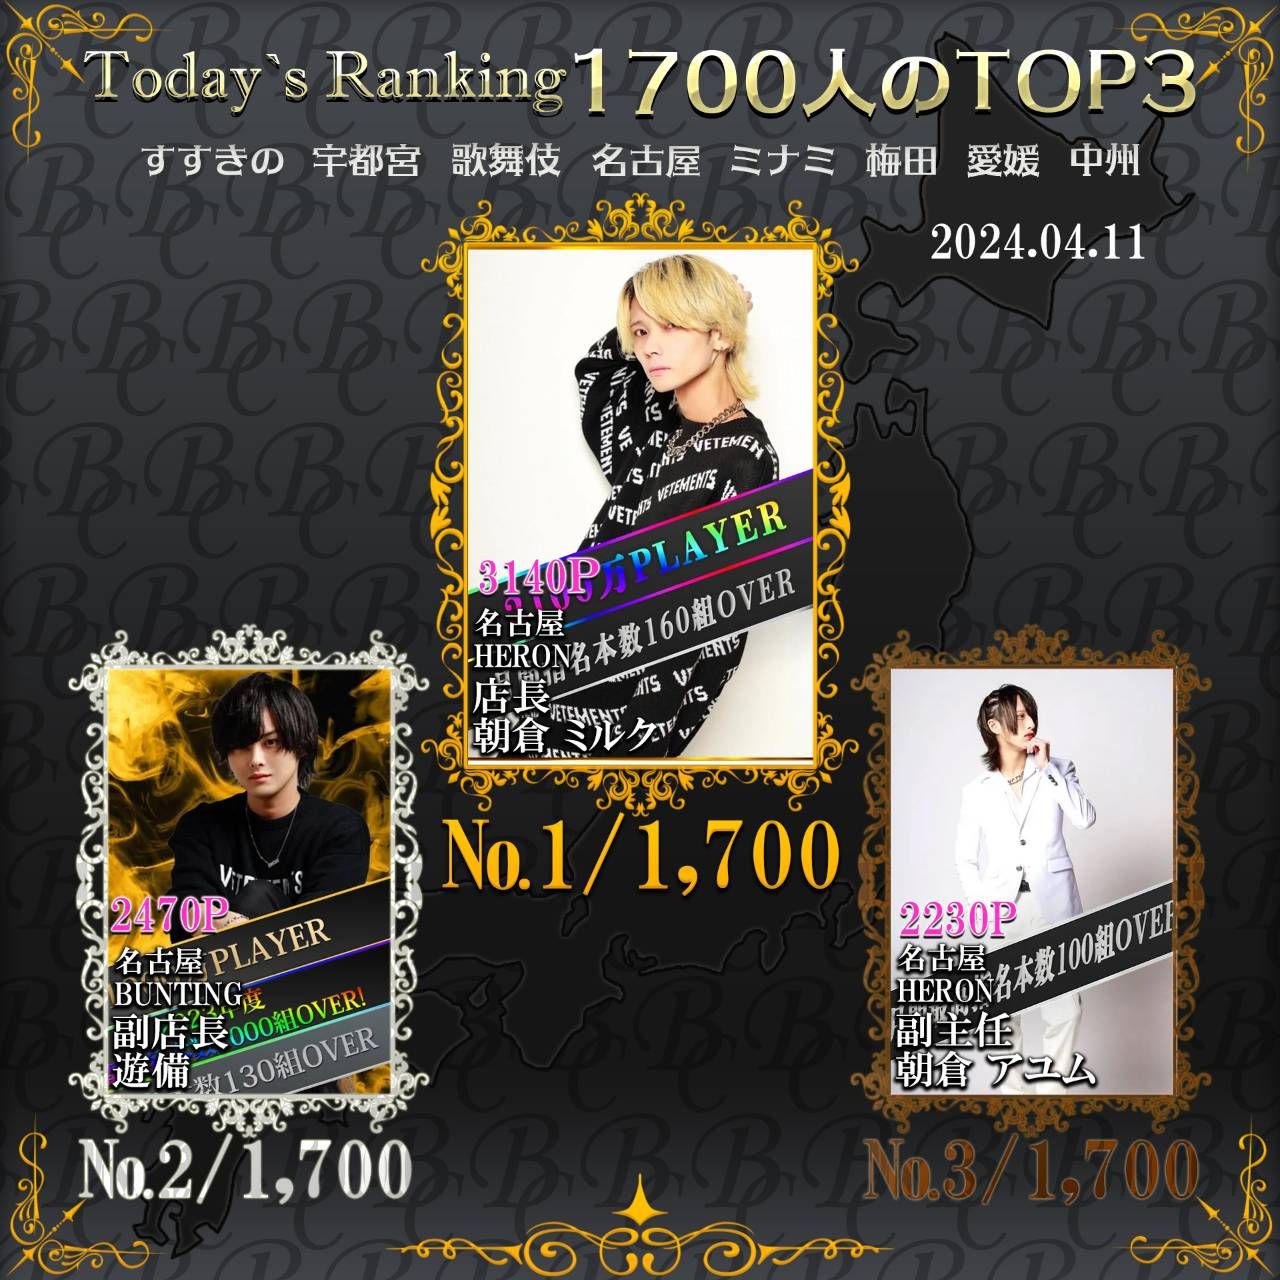 4/11 Today’s Ranking